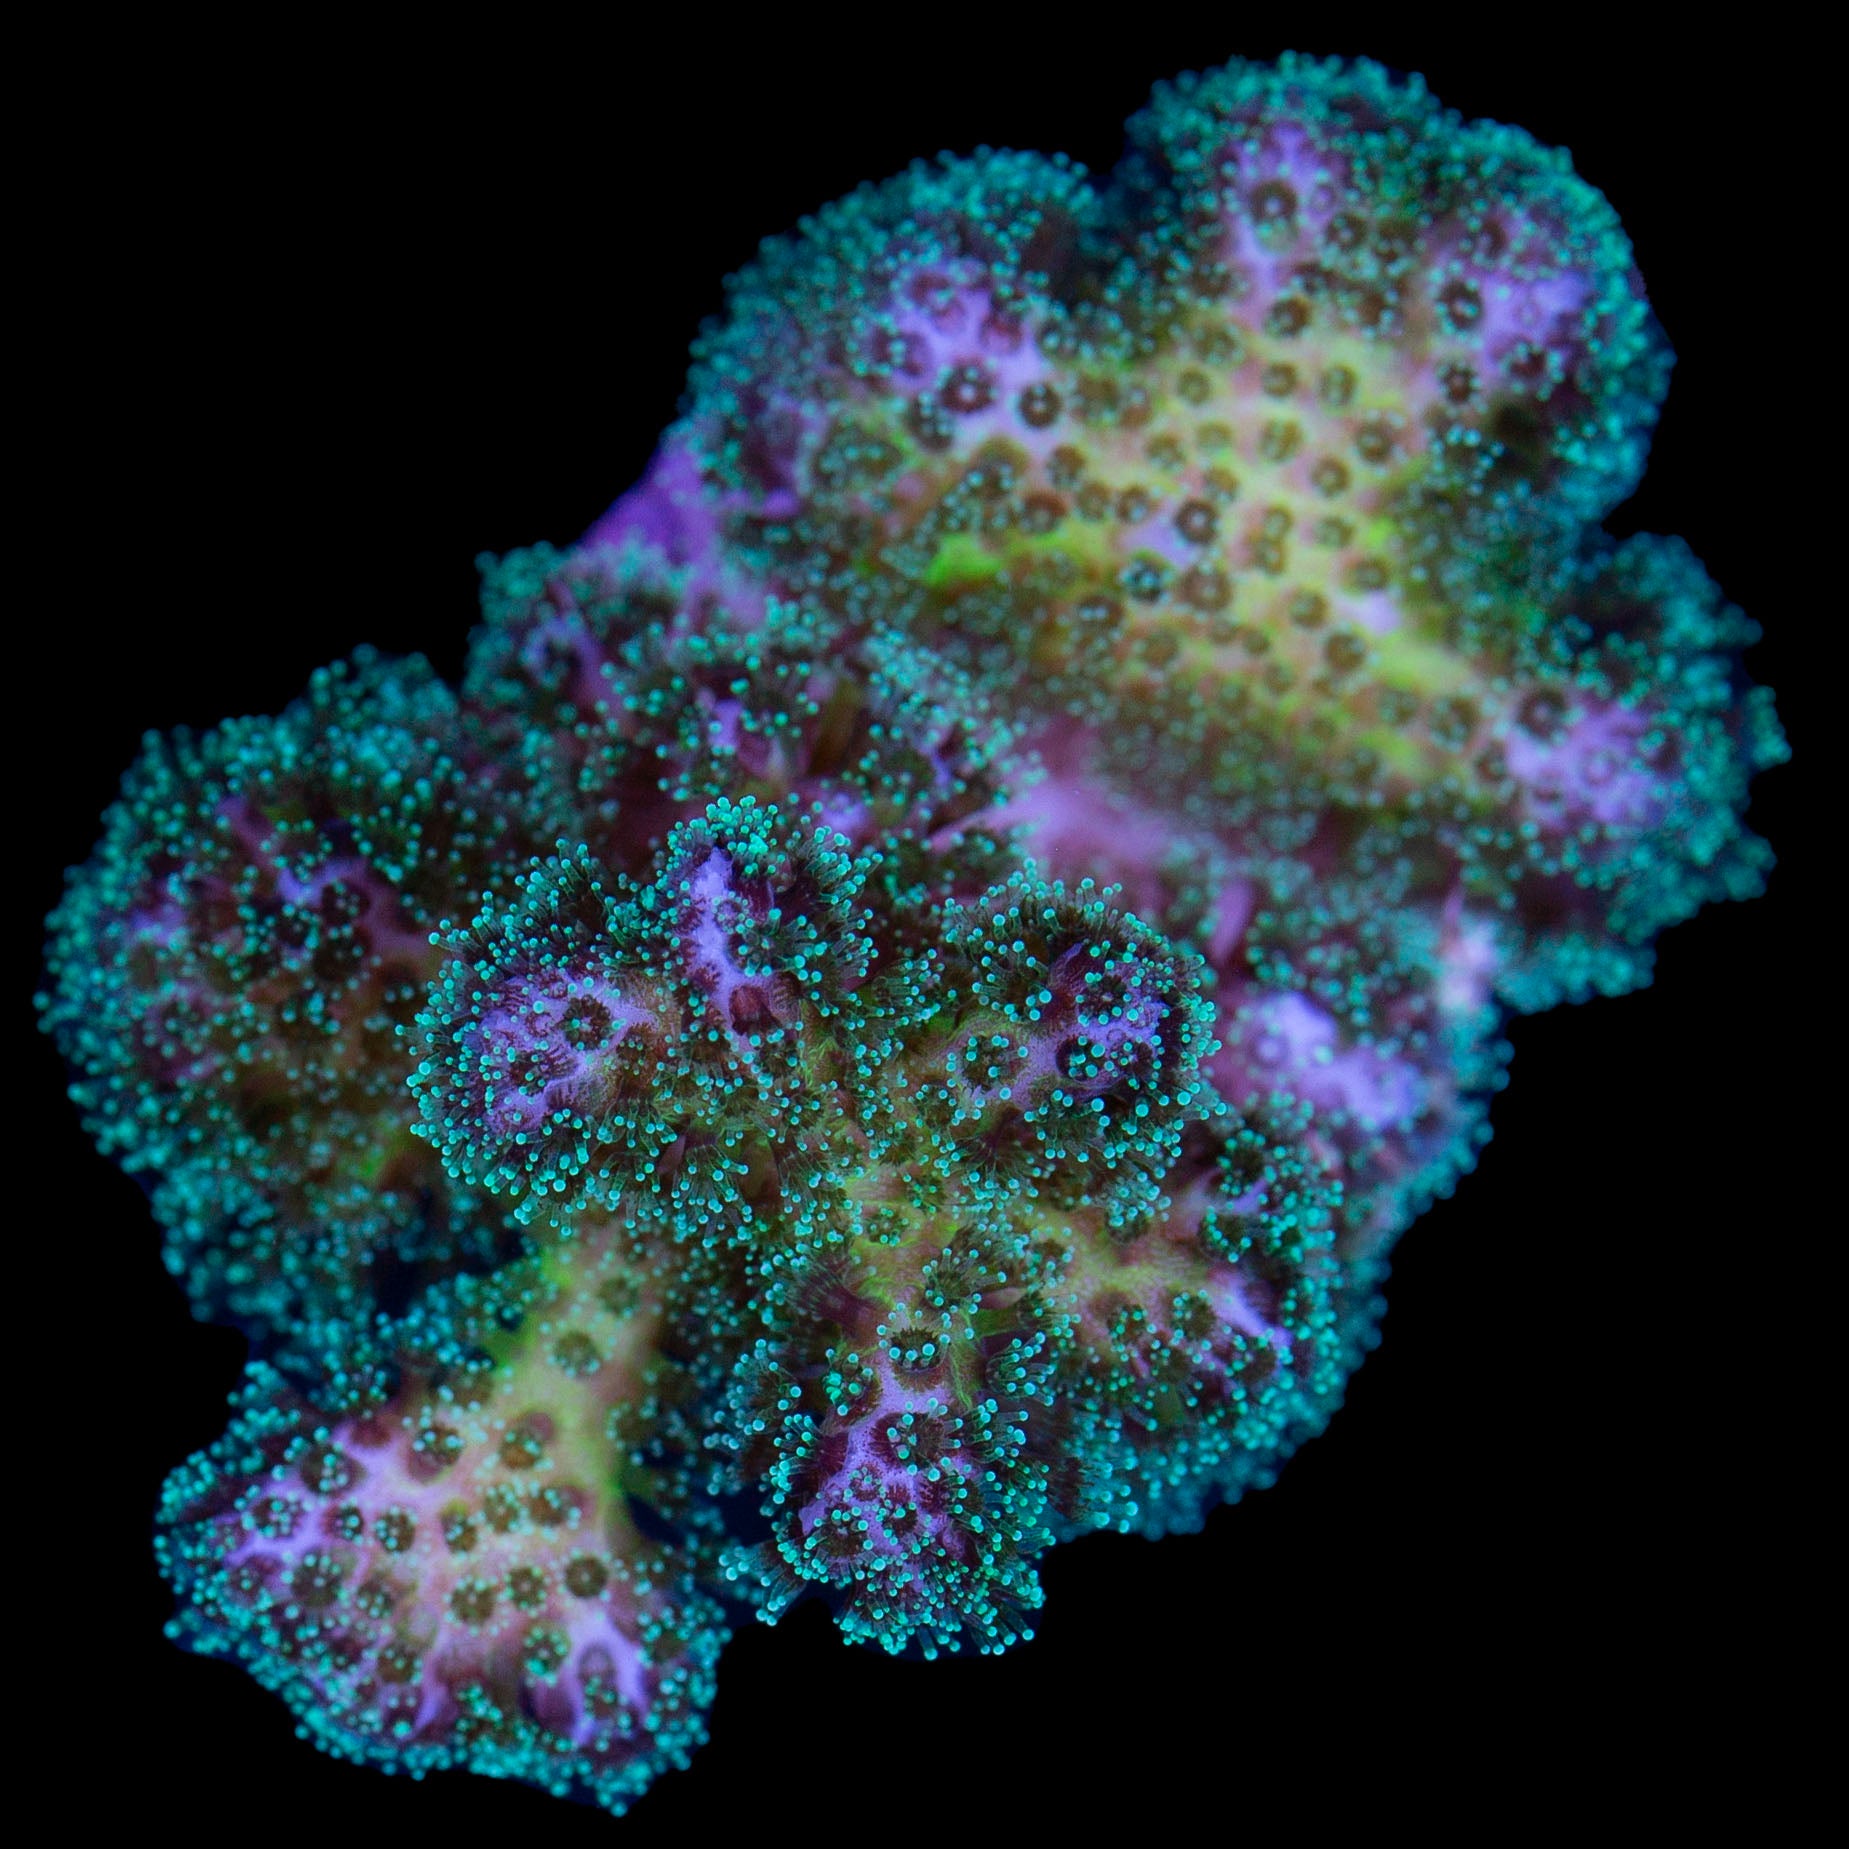 Pink & Green Pocillopora Coral